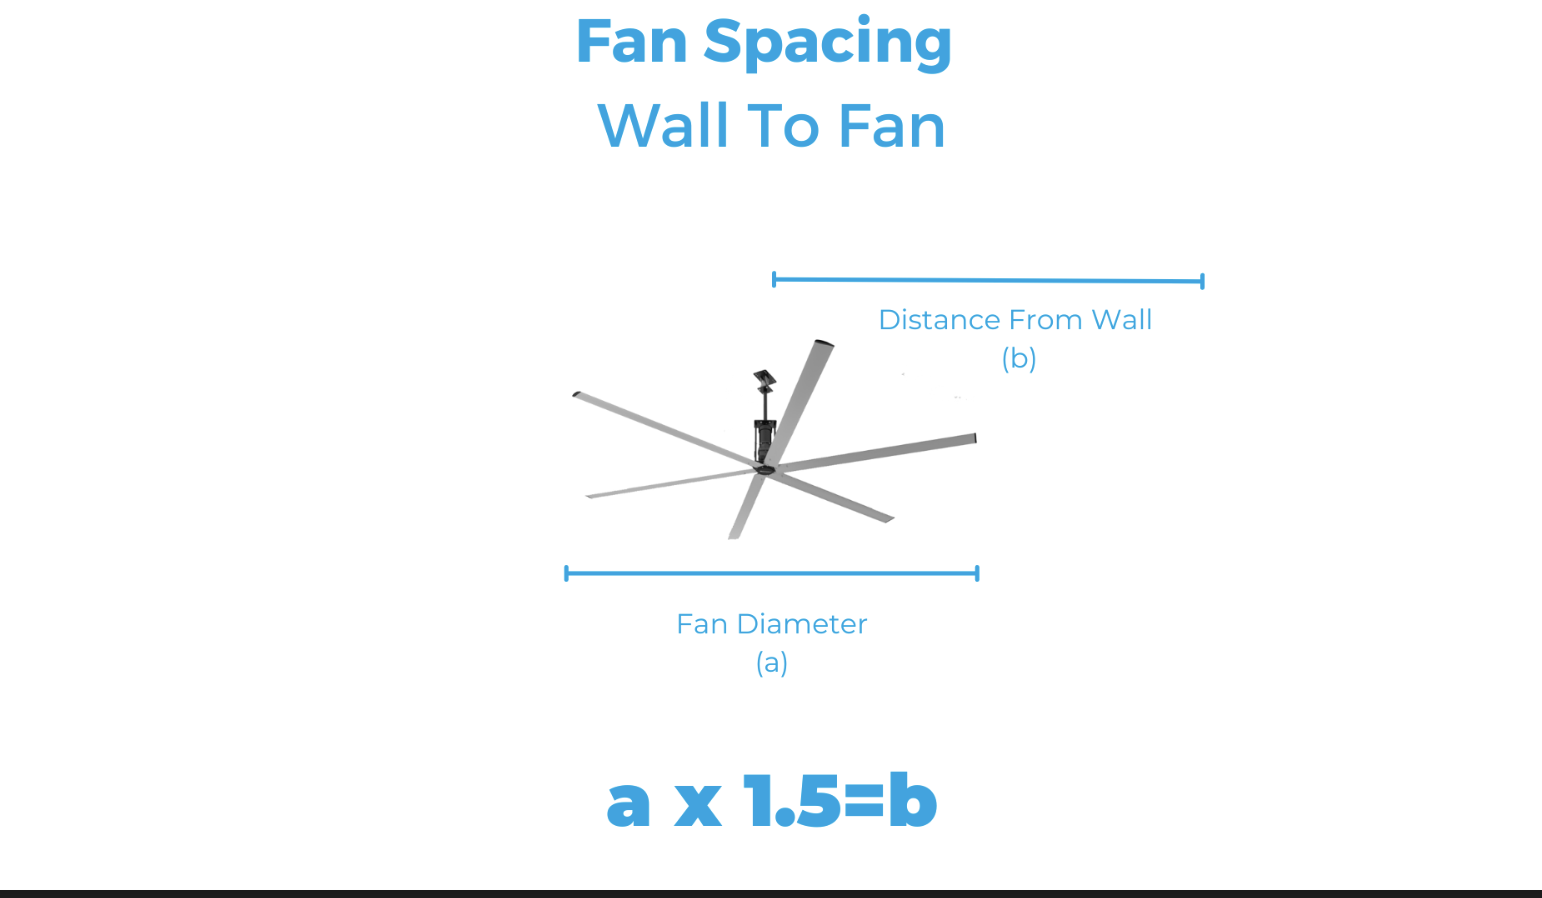 Big Fan spacing from wall